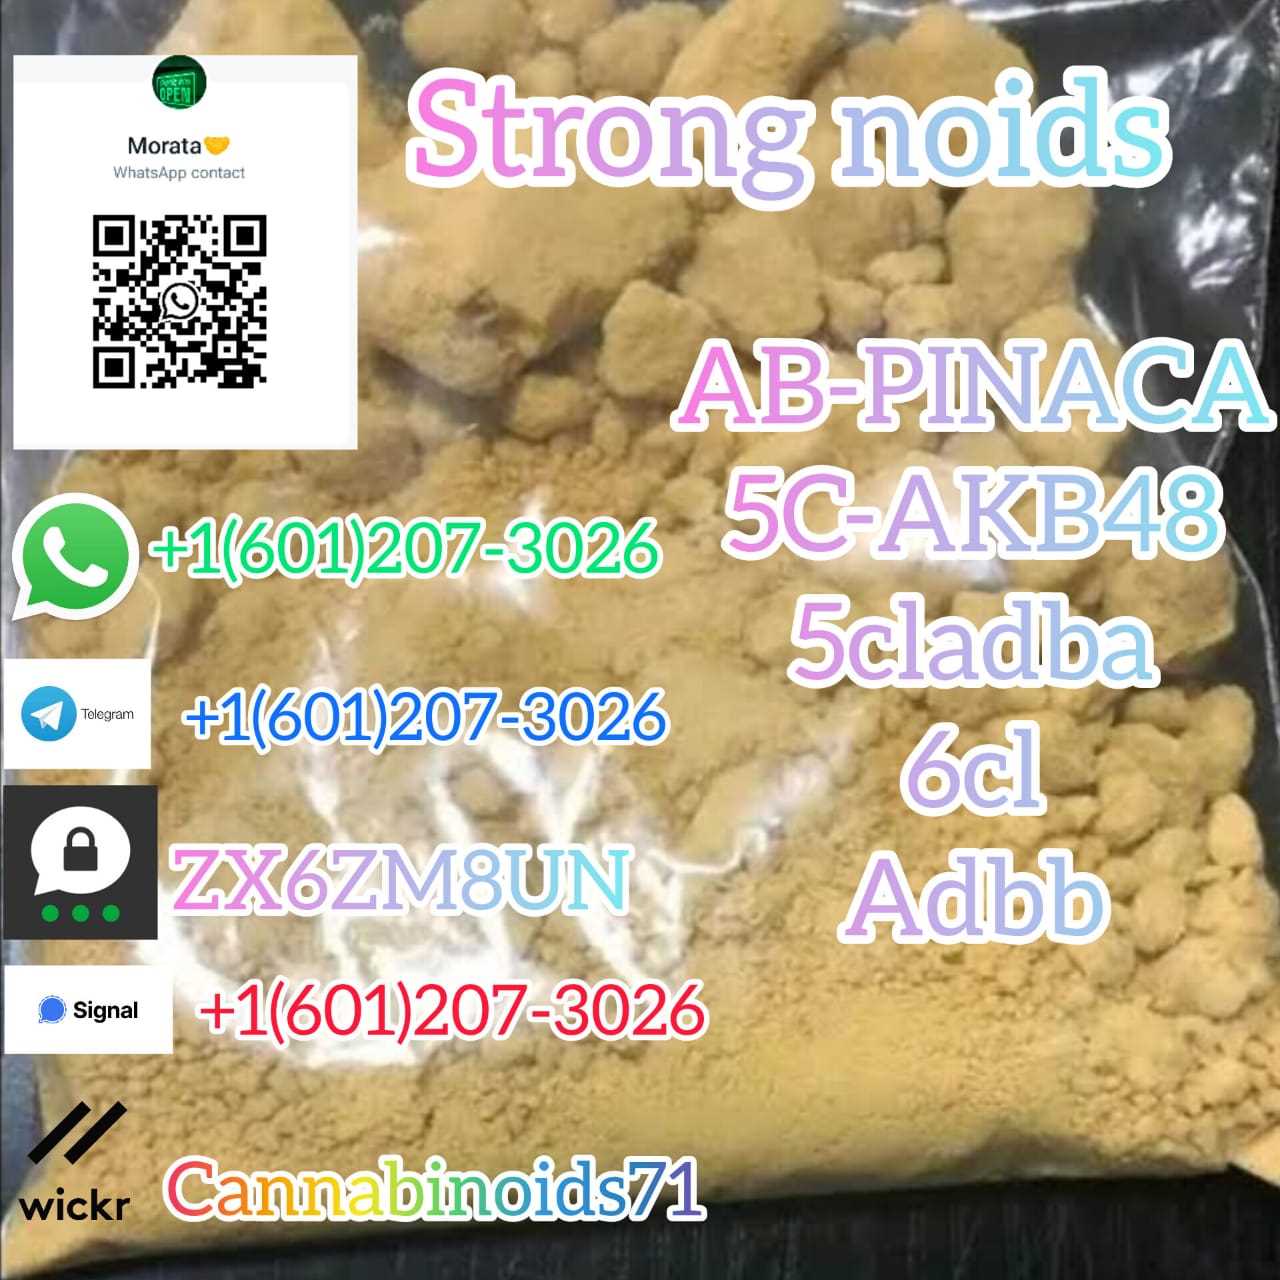 Telegram_+1 601-207-3026 Buy ADB-BUTINACA online, ADB-BUTINACA for sale, A-PVP or Flakka, AB-CHMINACA,	